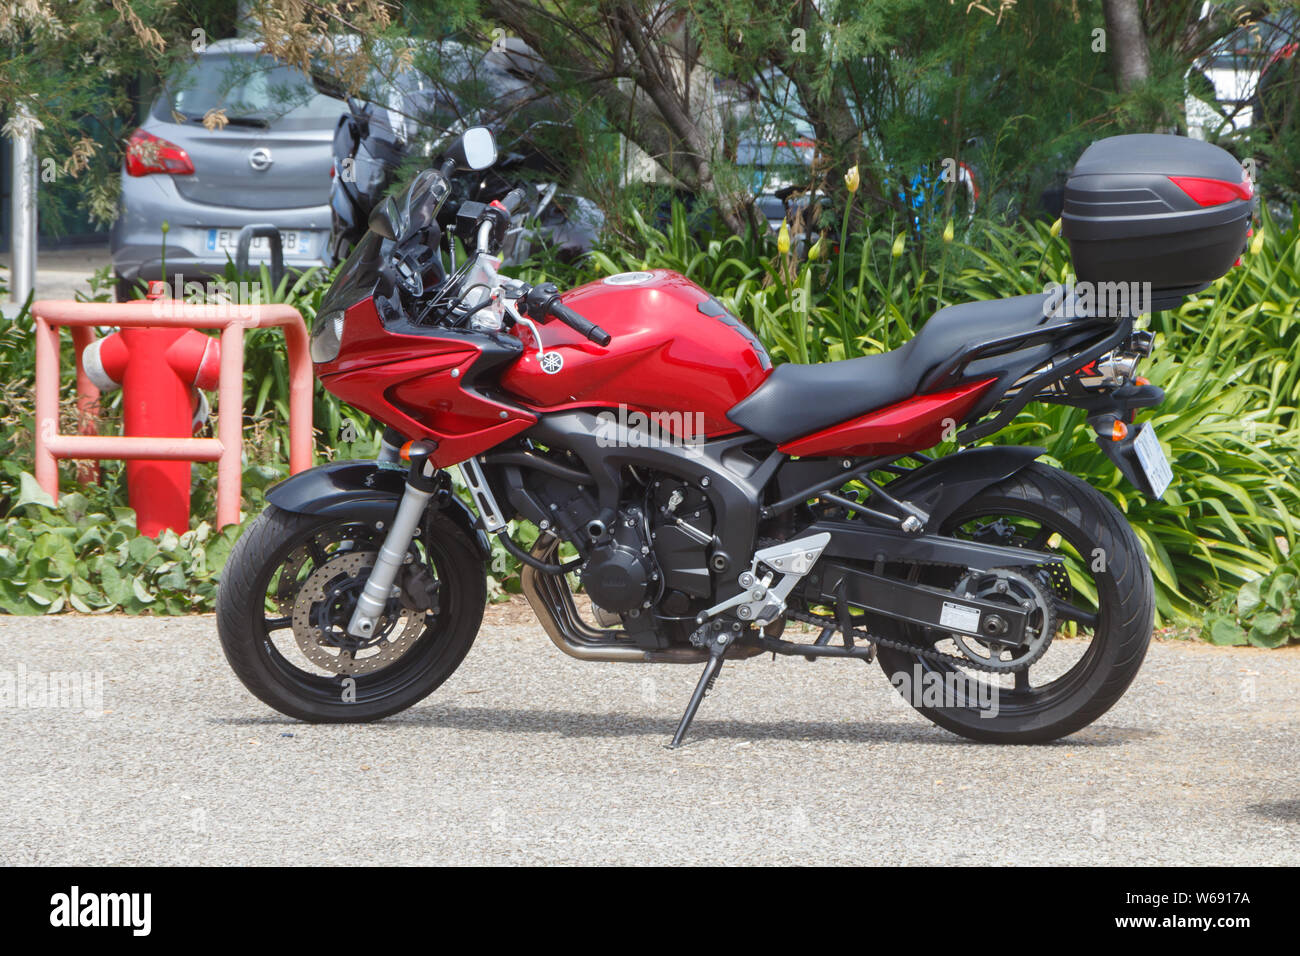 GUIPAVAS, FRANCE - JUIN 01 : Moto Yamaha moderne rouge garée, 01 juin, 2019  Photo Stock - Alamy